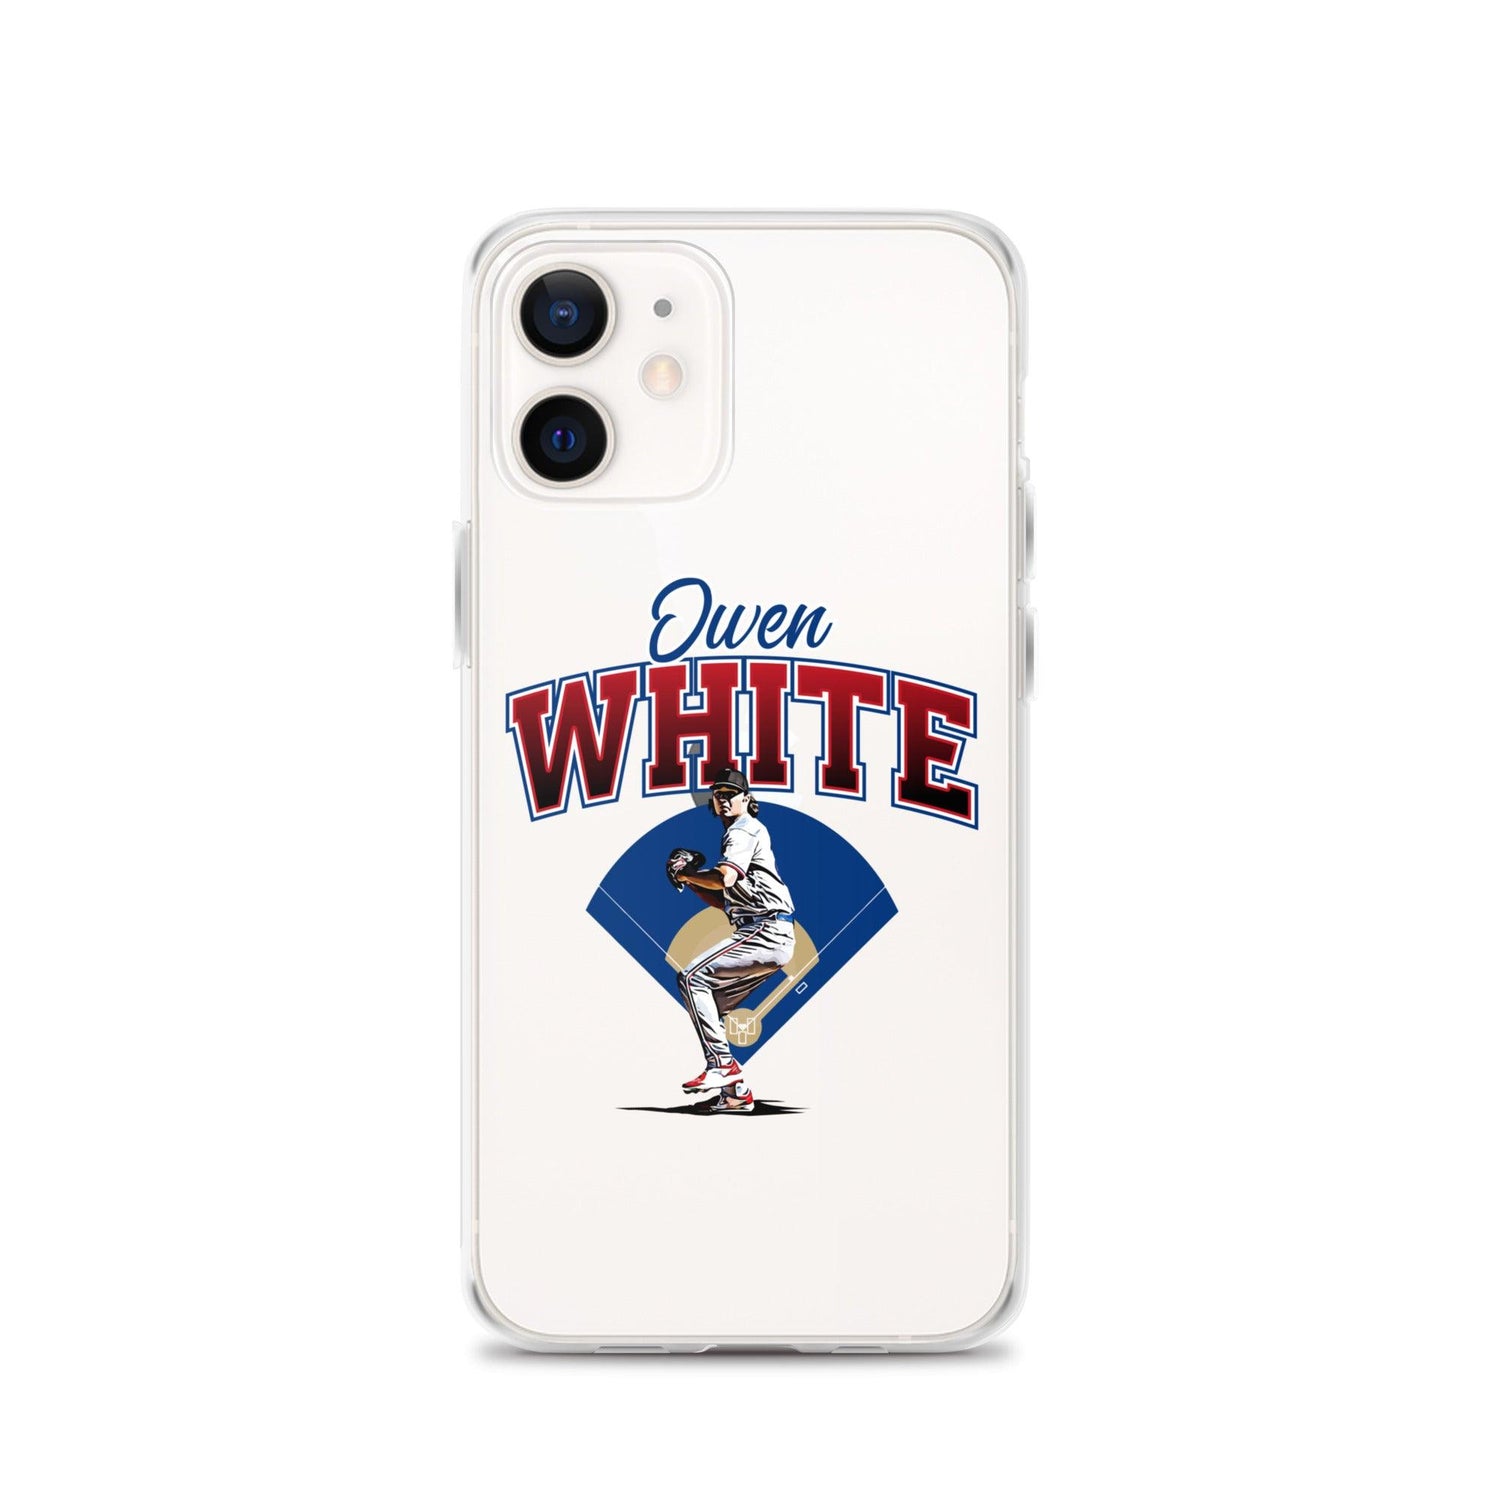 Owen White “Essential” iPhone Case - Fan Arch